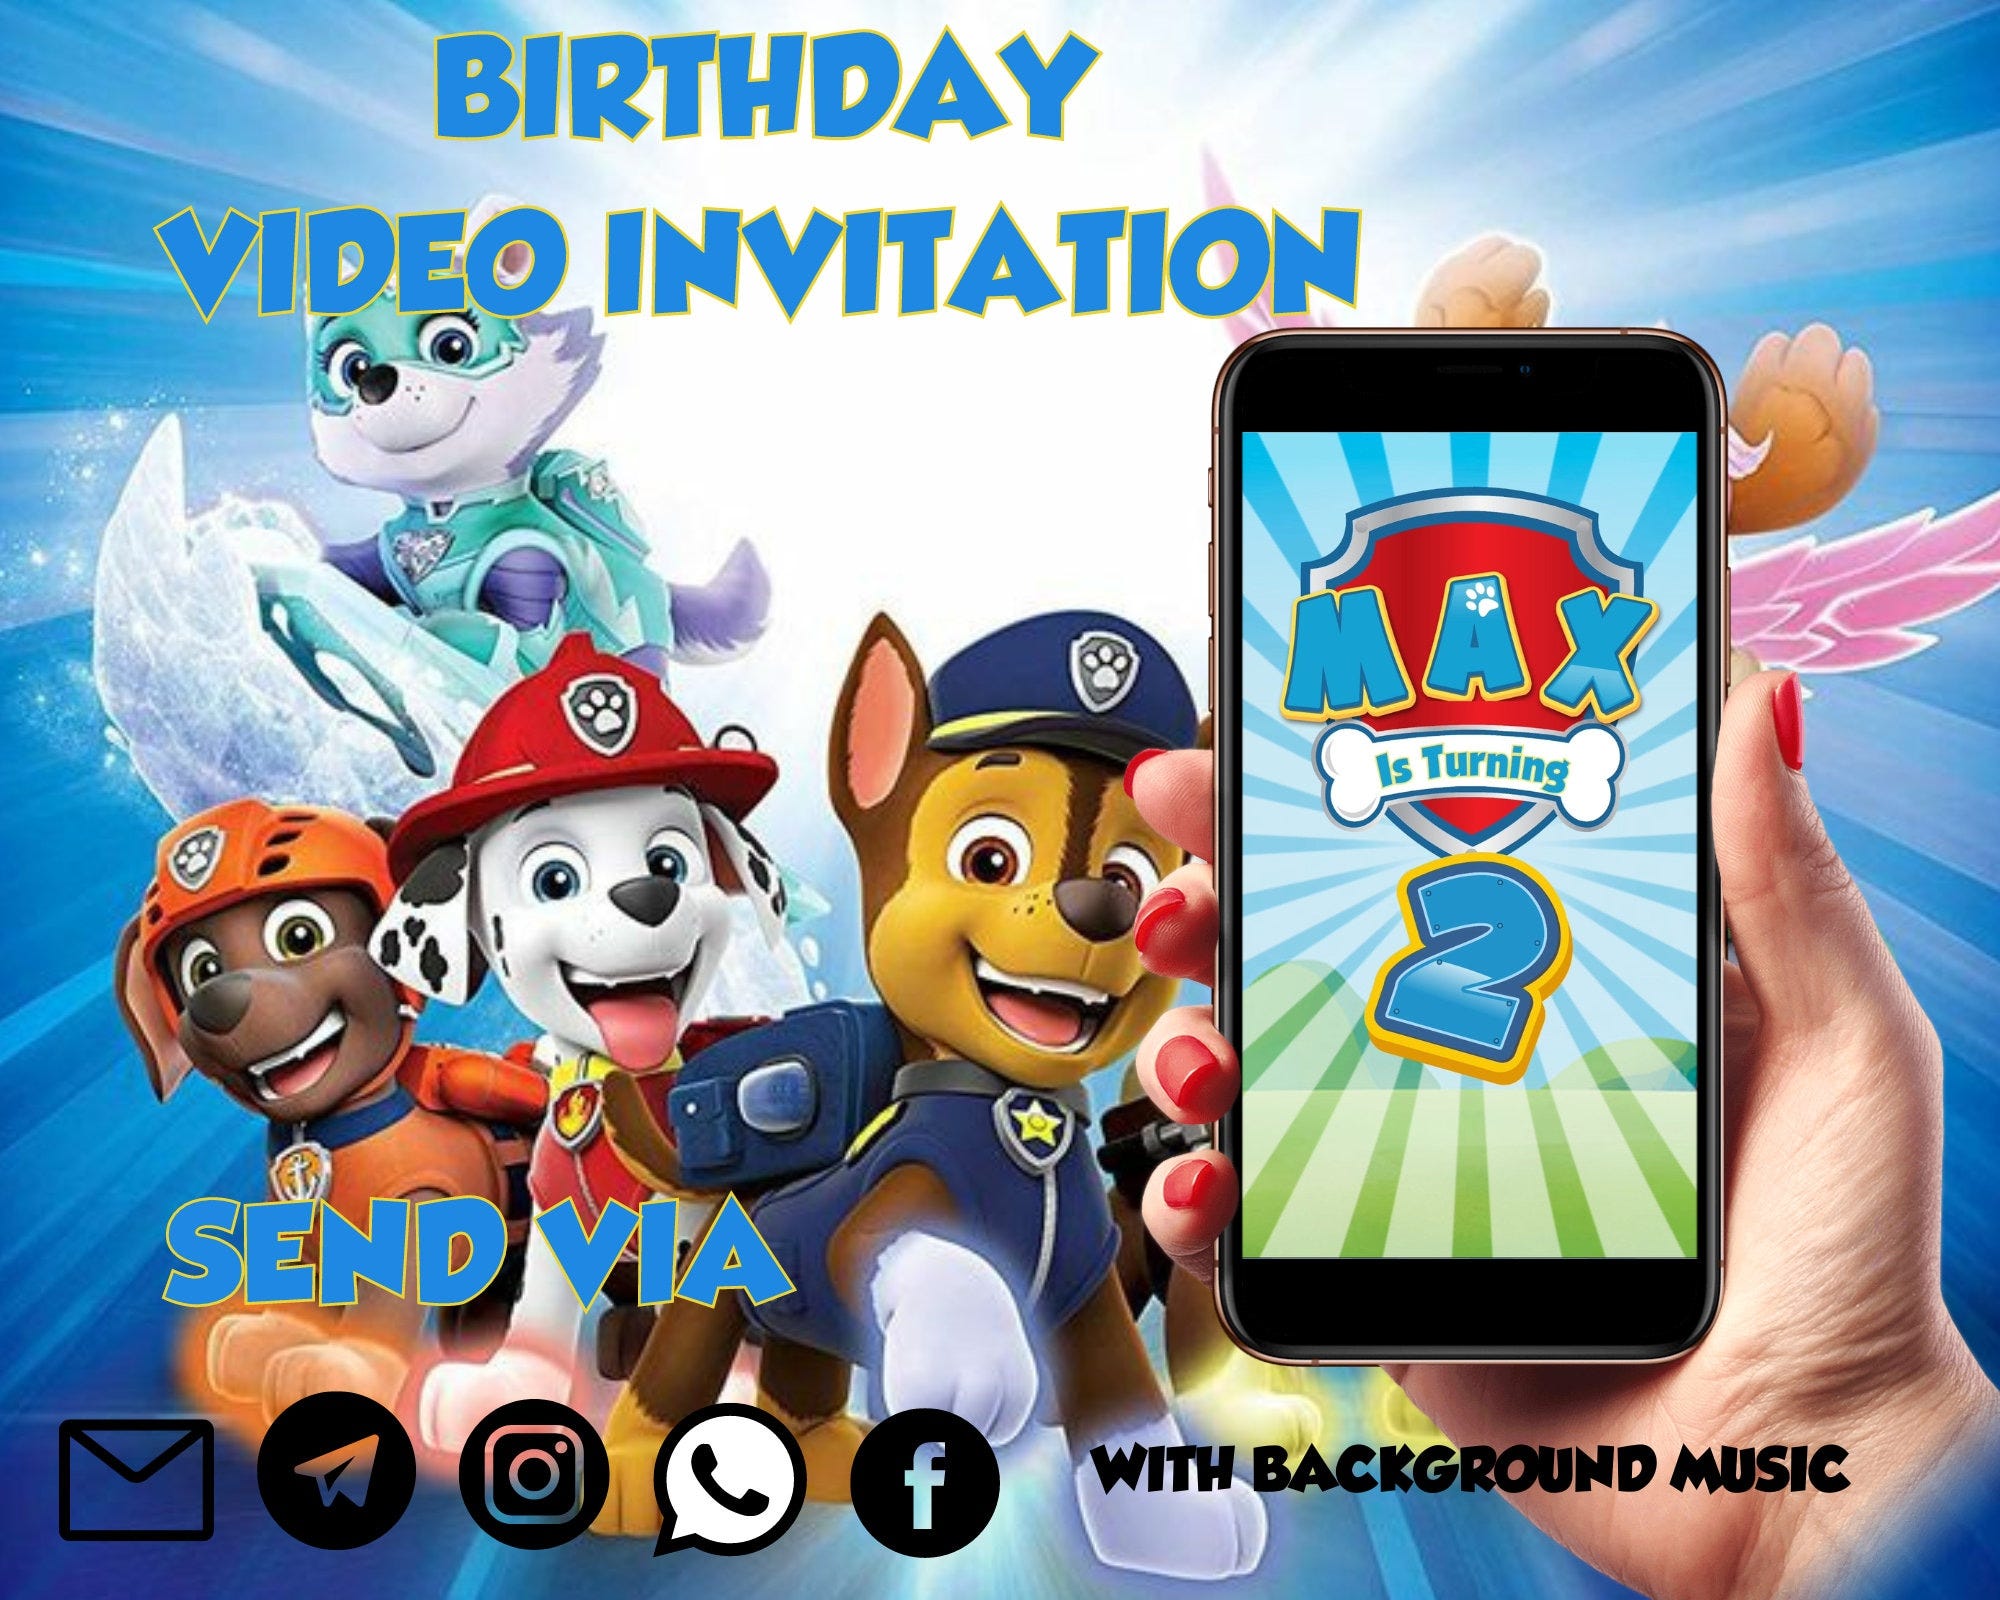 Paw birthday video invitation, paw digital Video invitation, paw personalized video Invitation, patrol evites